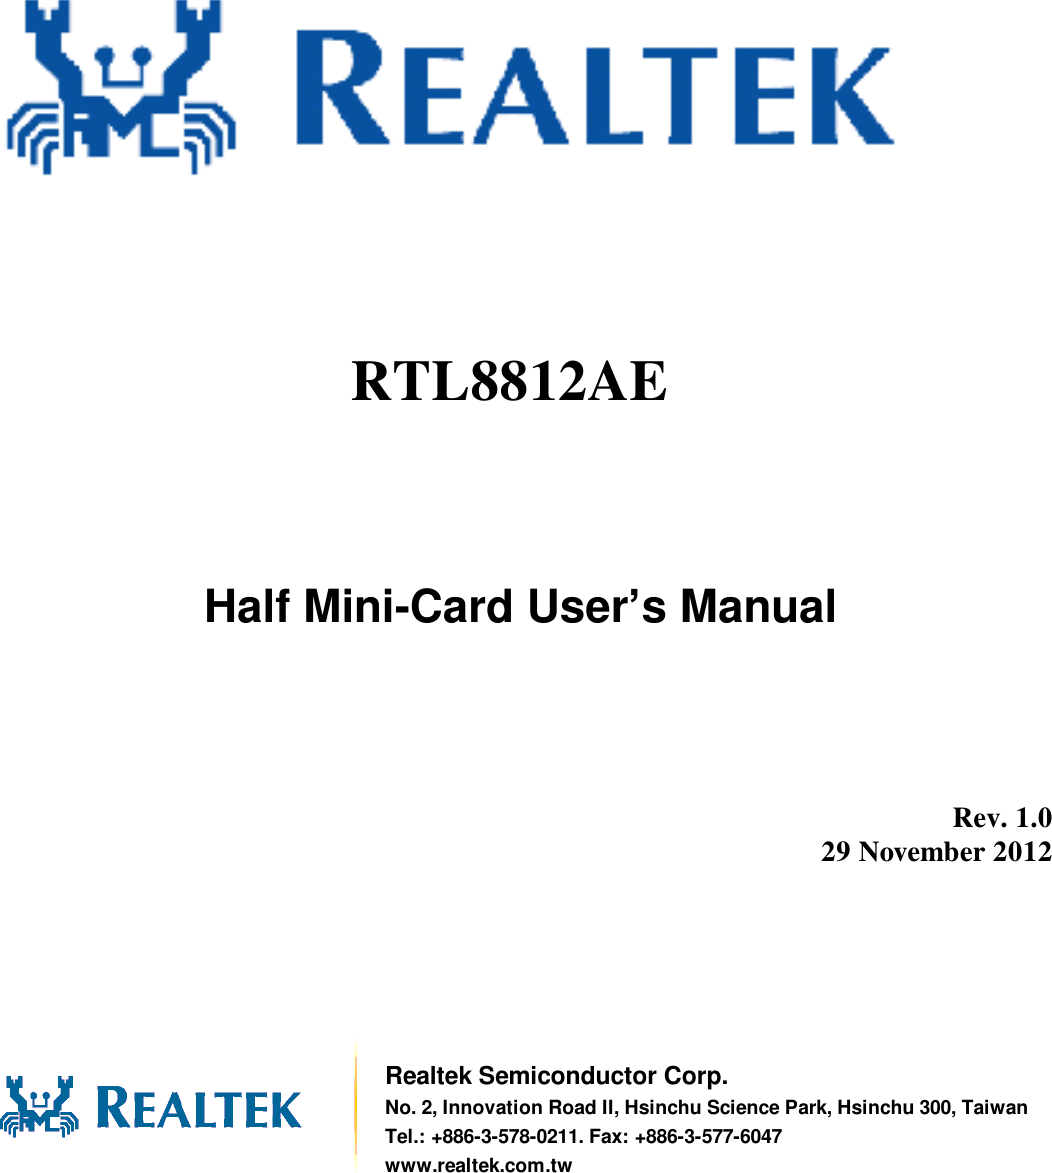                Half Mini-Card User’s Manual          Rev. 1.0 29 November 2012        Realtek Semiconductor Corp. No. 2, Innovation Road II, Hsinchu Science Park, Hsinchu 300, Taiwan Tel.: +886-3-578-0211. Fax: +886-3-577-6047 www.realtek.com.tw RTL8812AE  